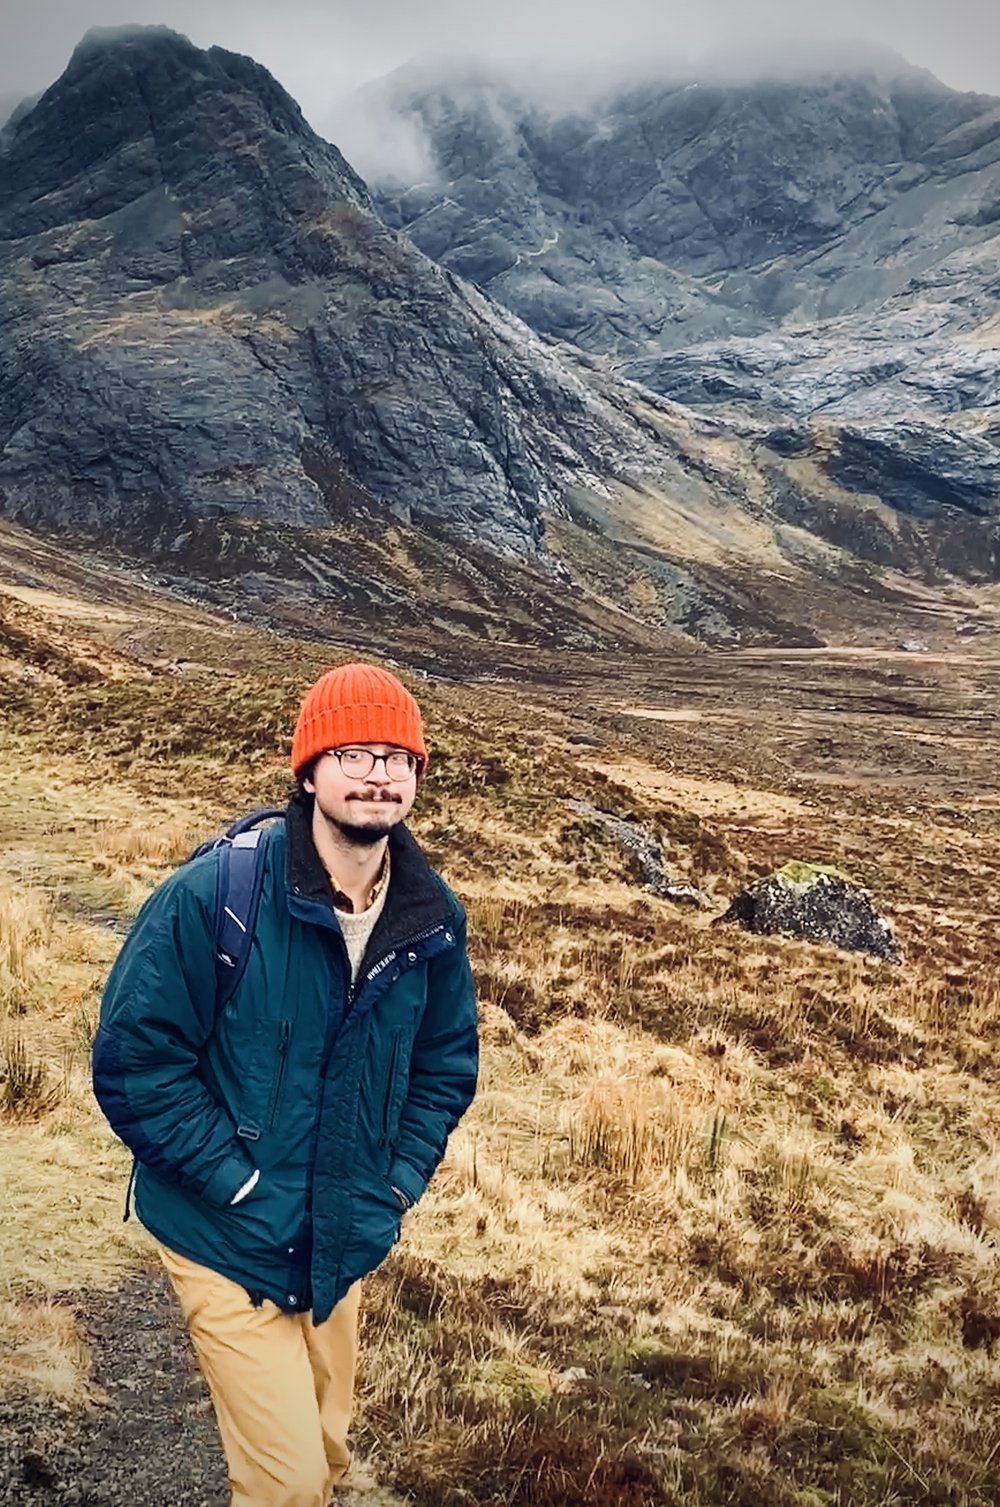 hiking family vacation to isle of skye, scotland